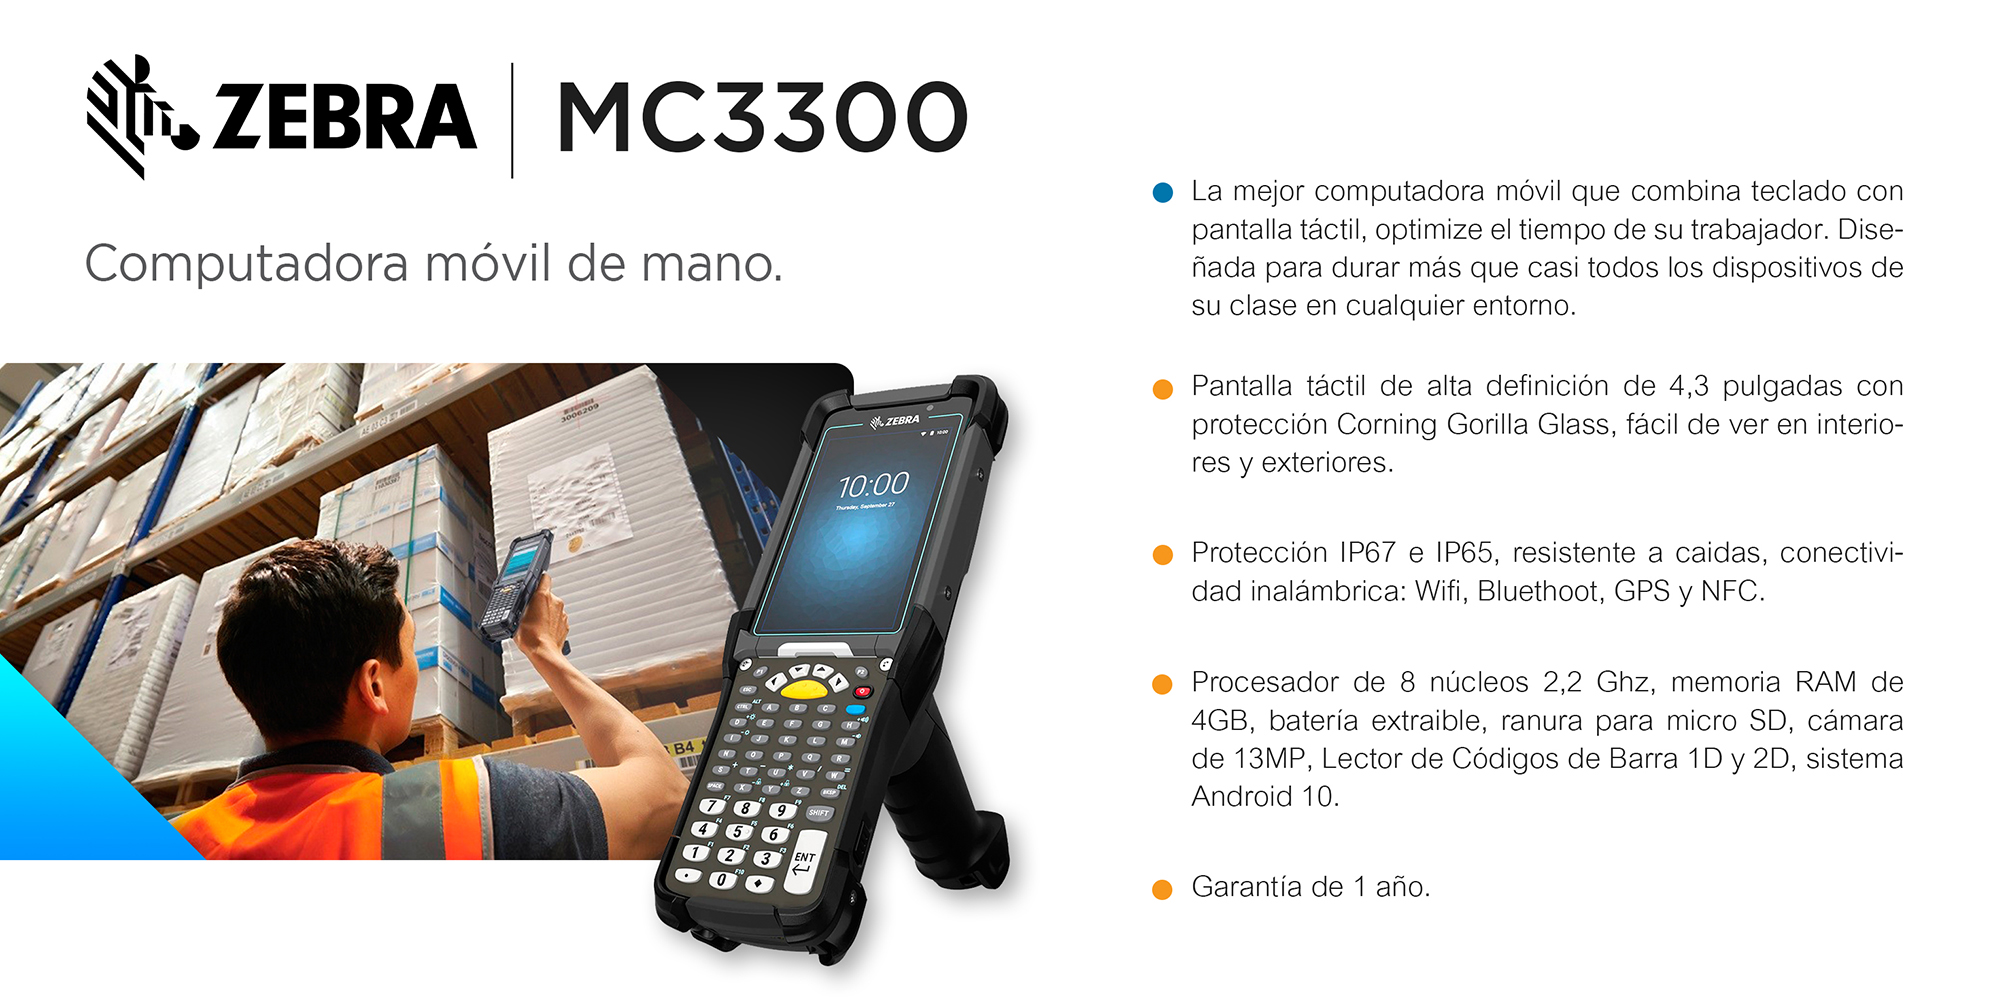 MC3300_ZEBRA